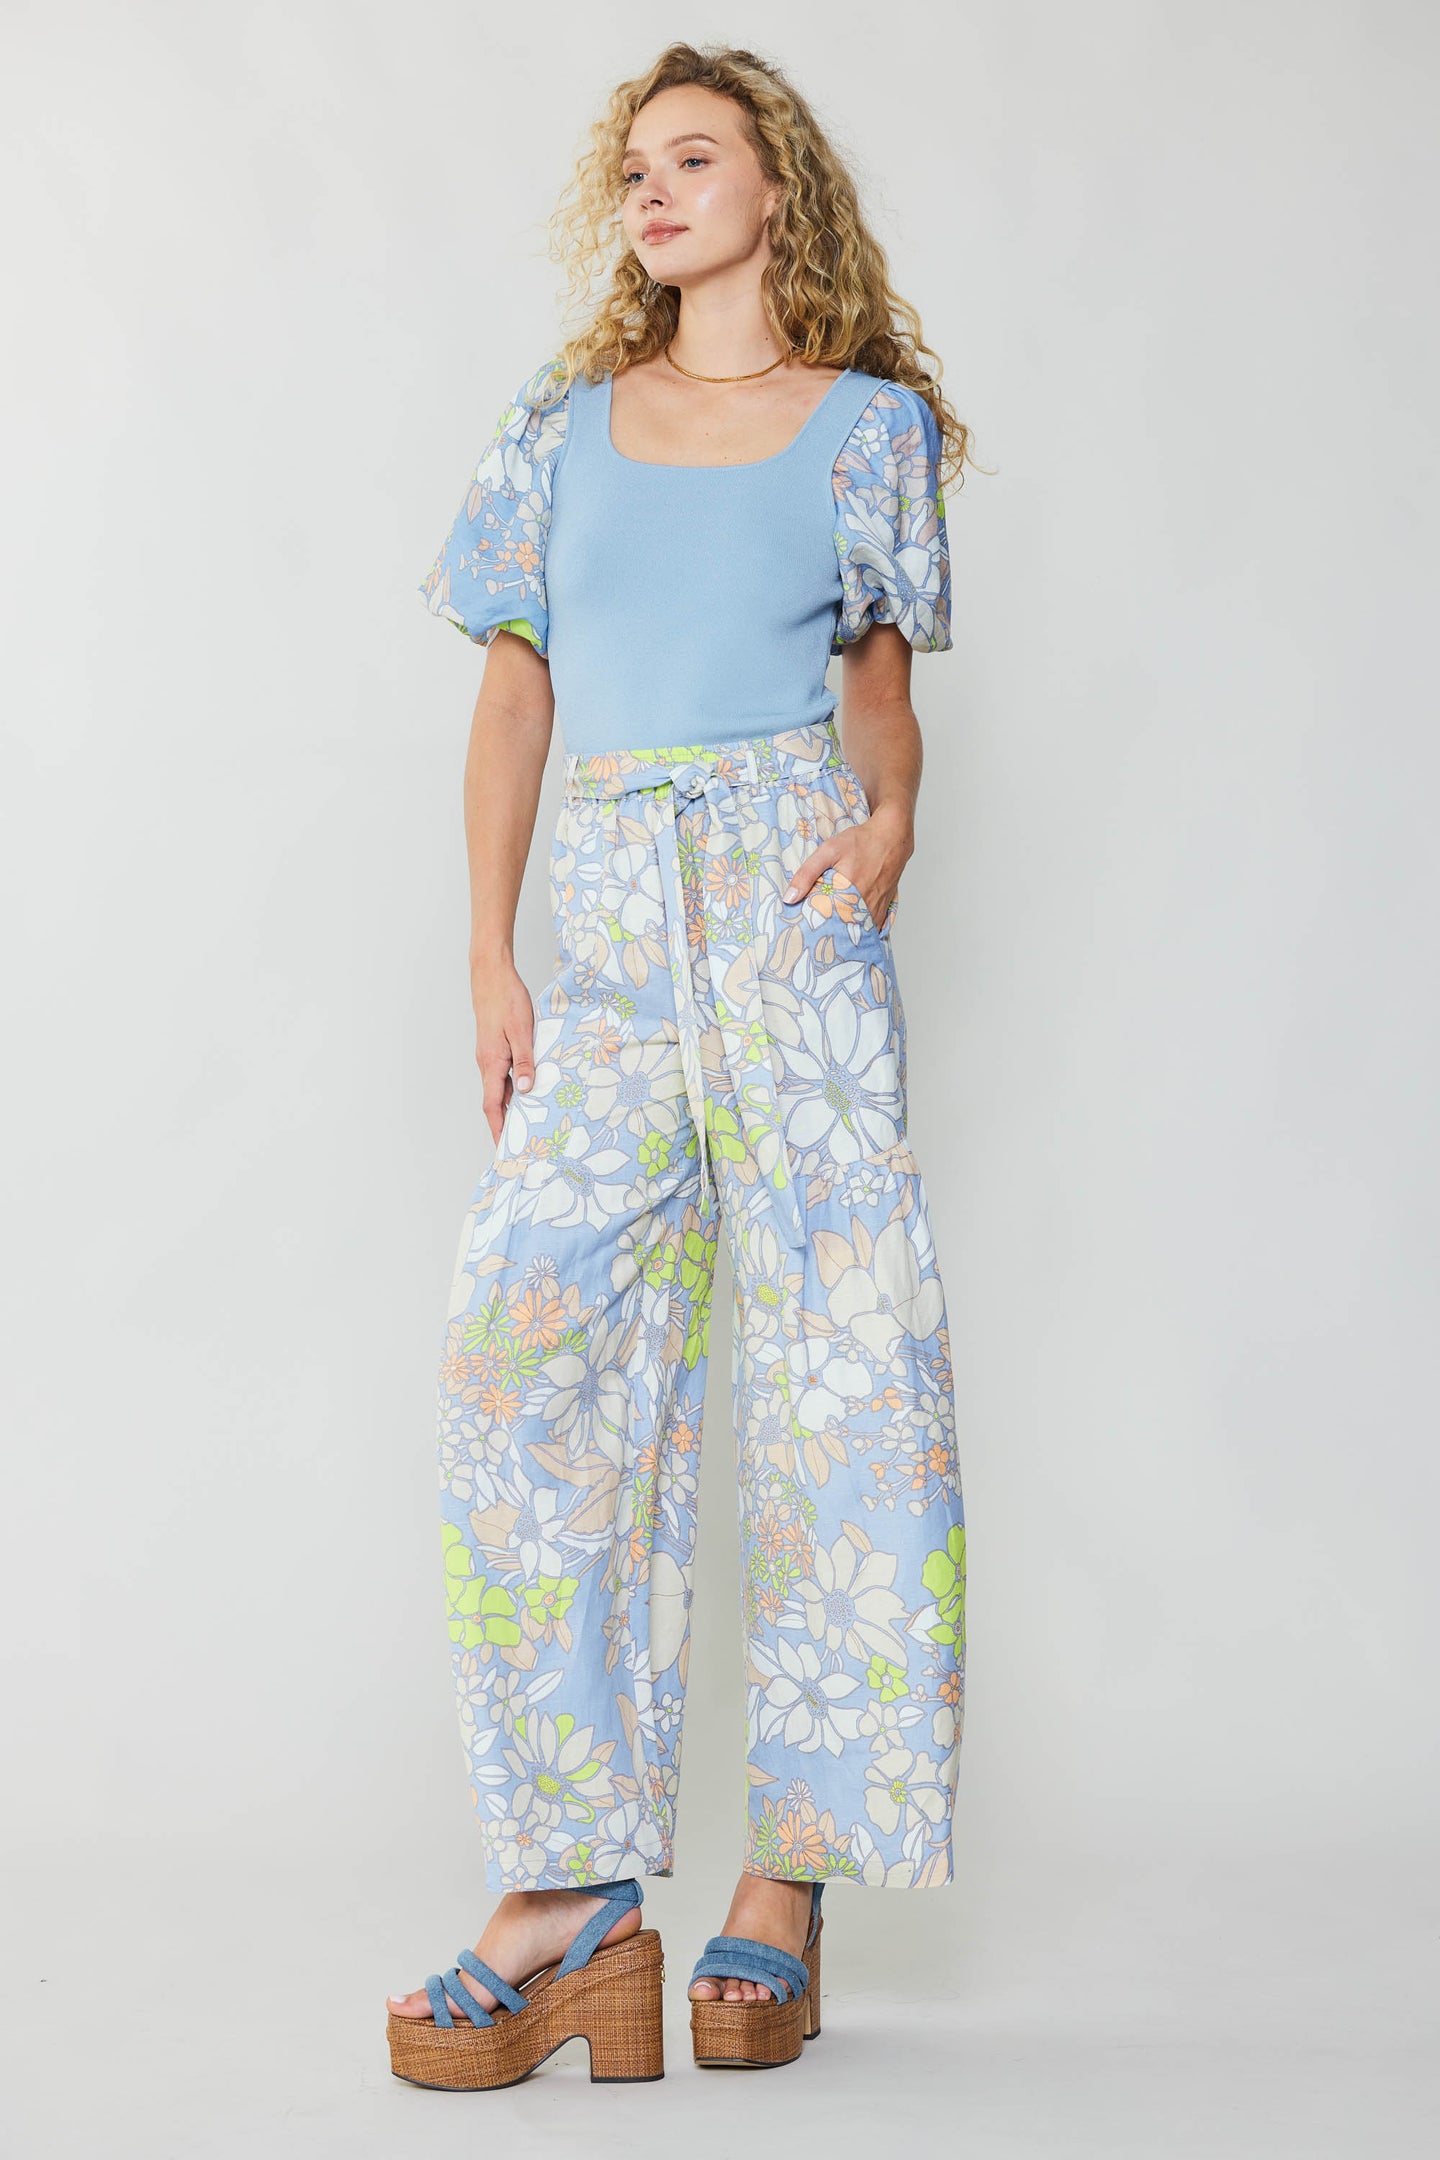 Zara Printed Linen Blend Trousers Size Medium